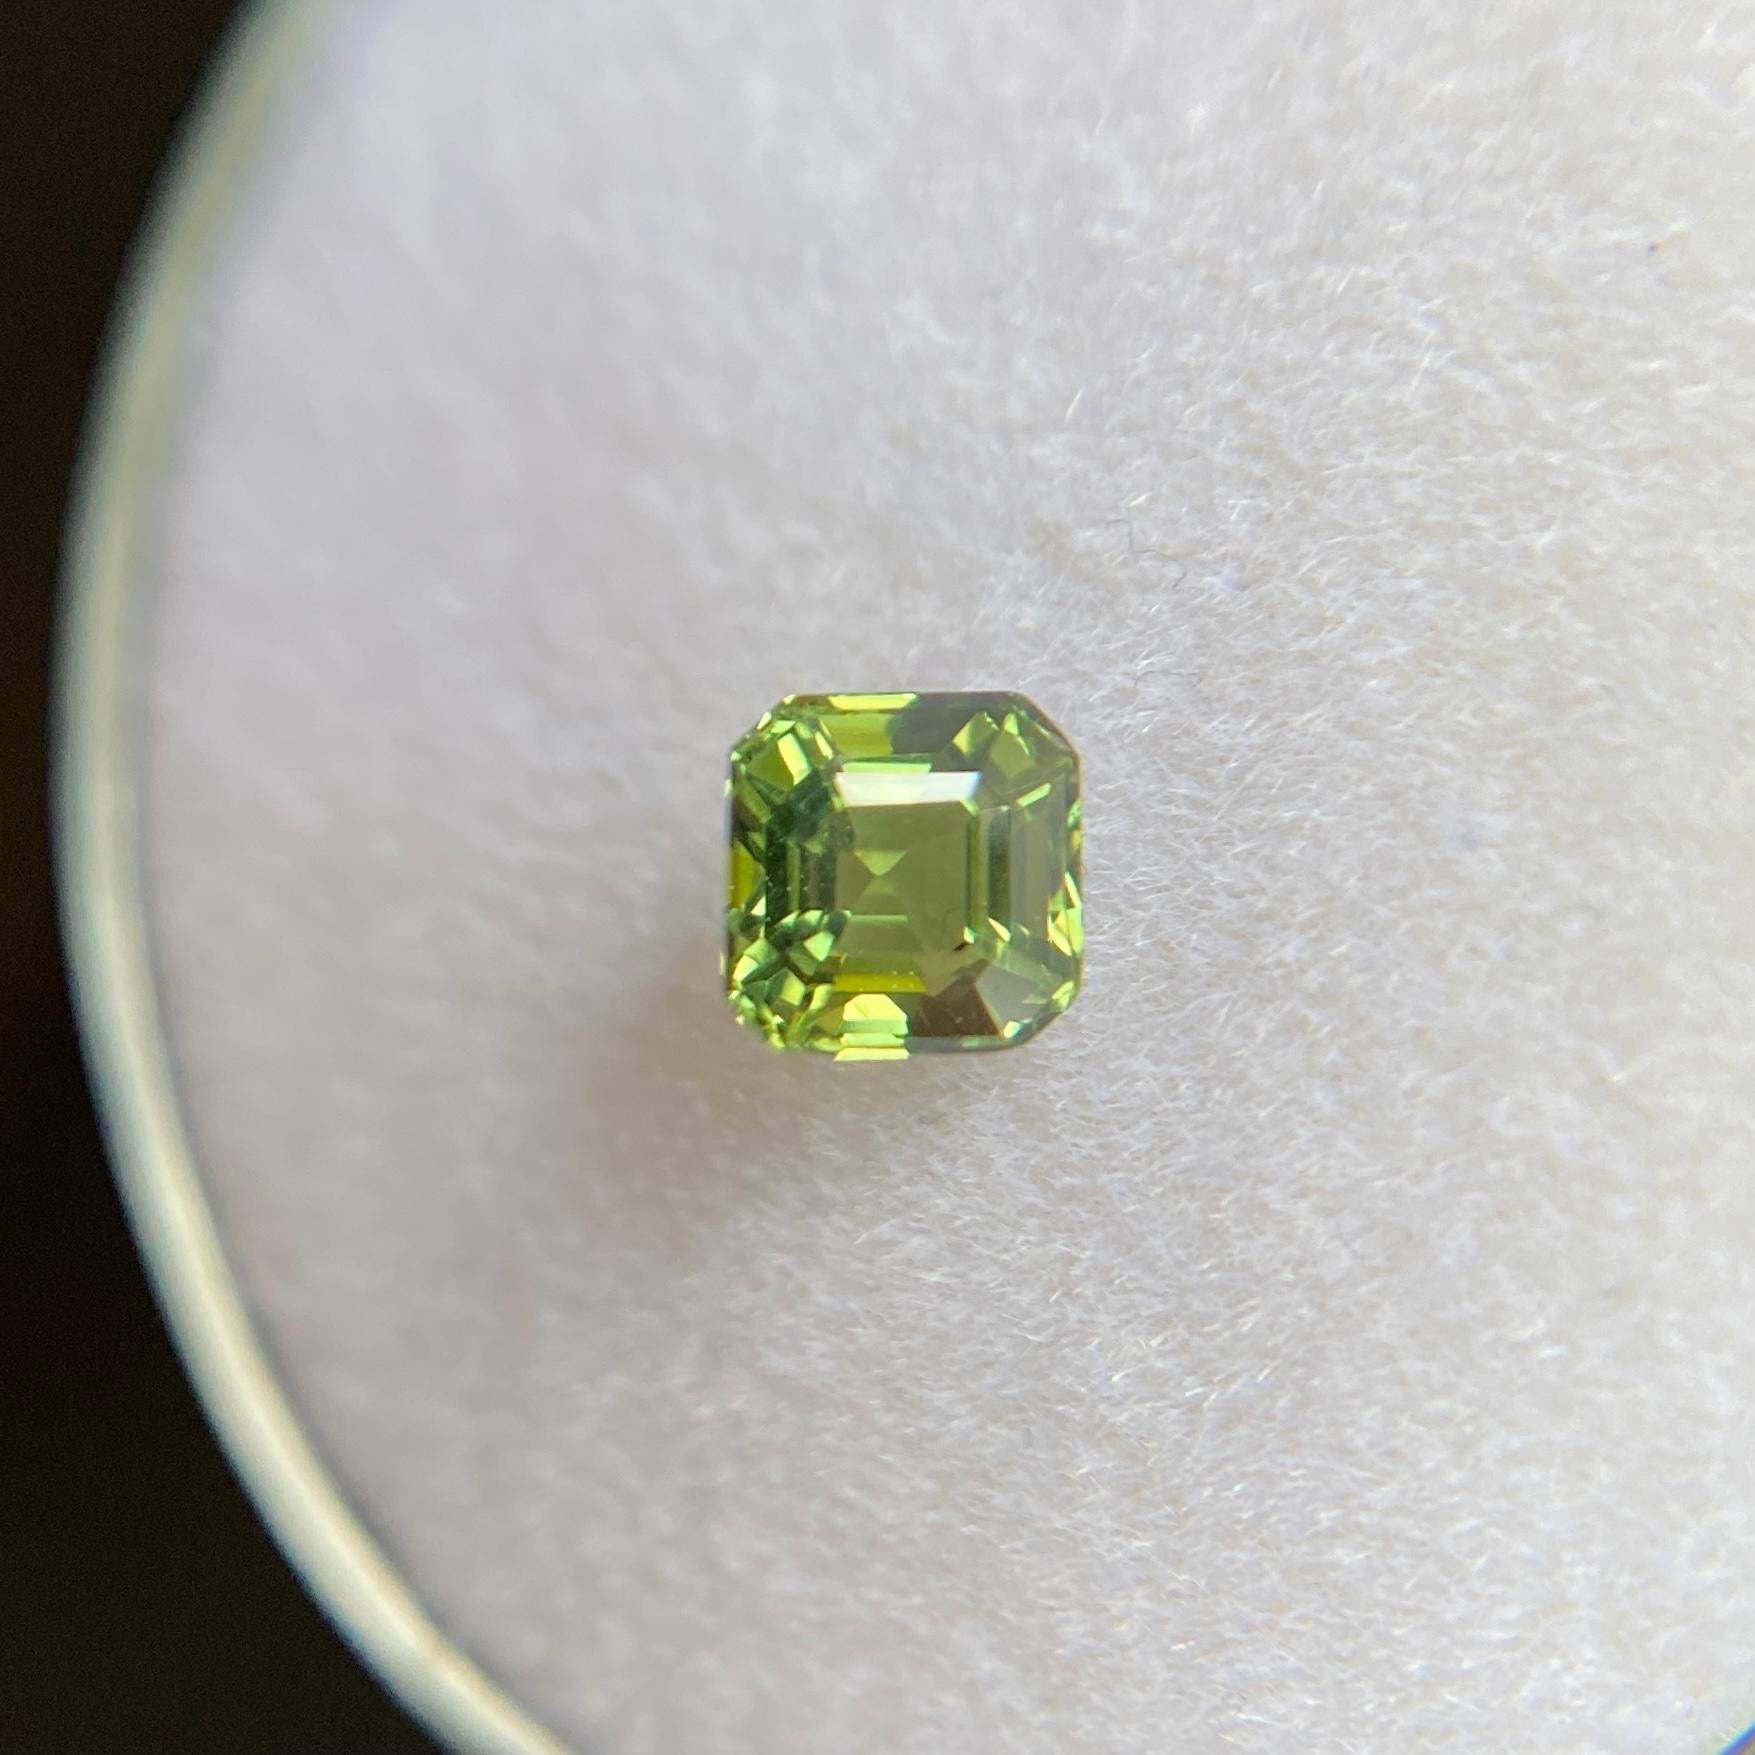 yellow and green gemstones